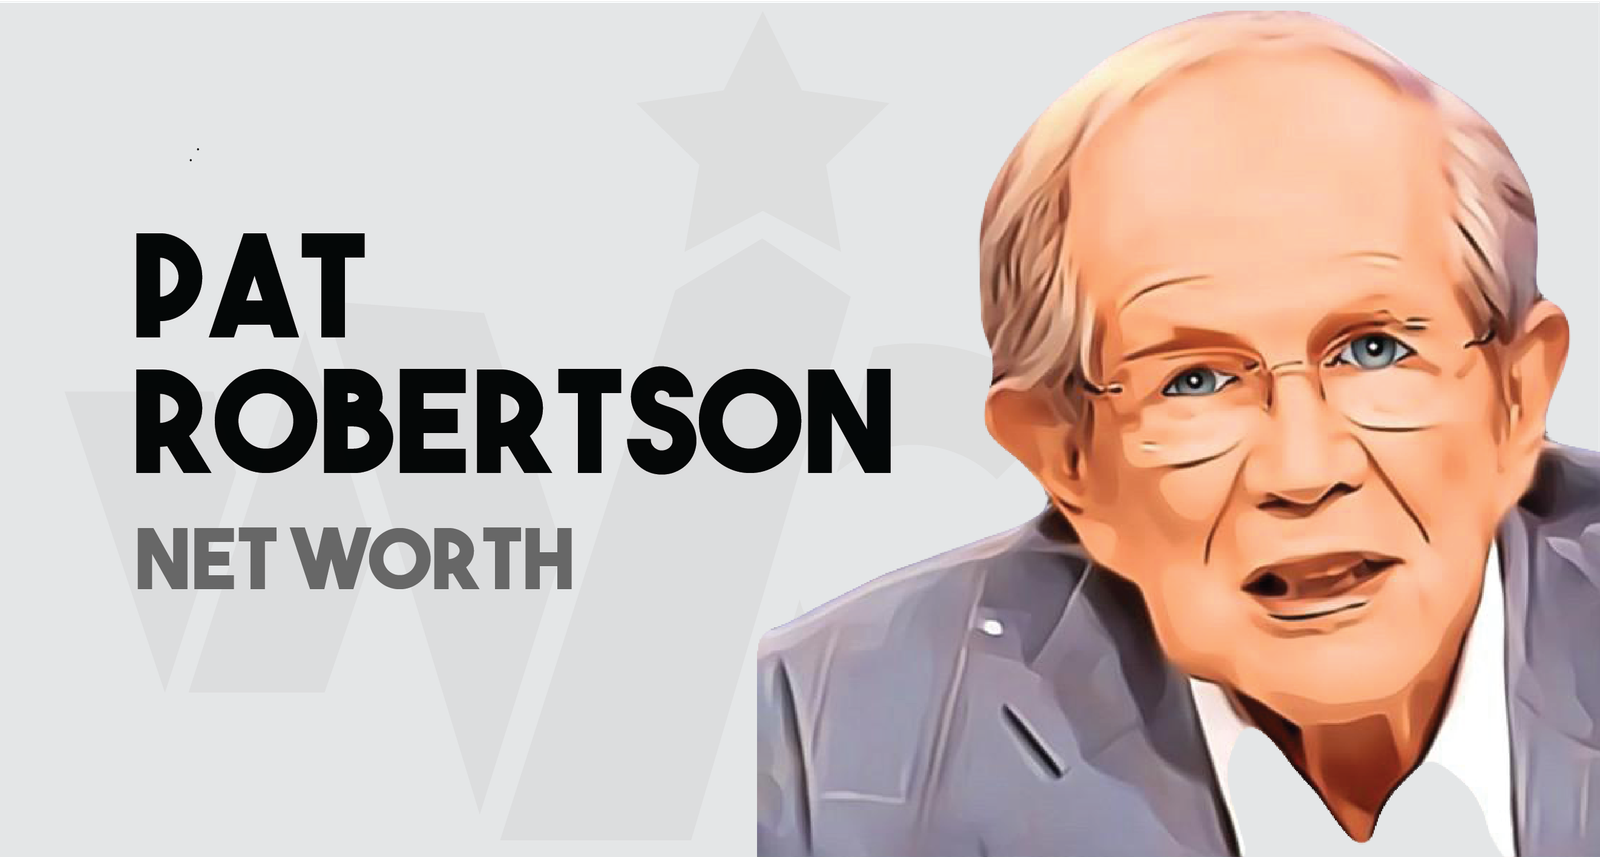 Pat Robertson - Net worth